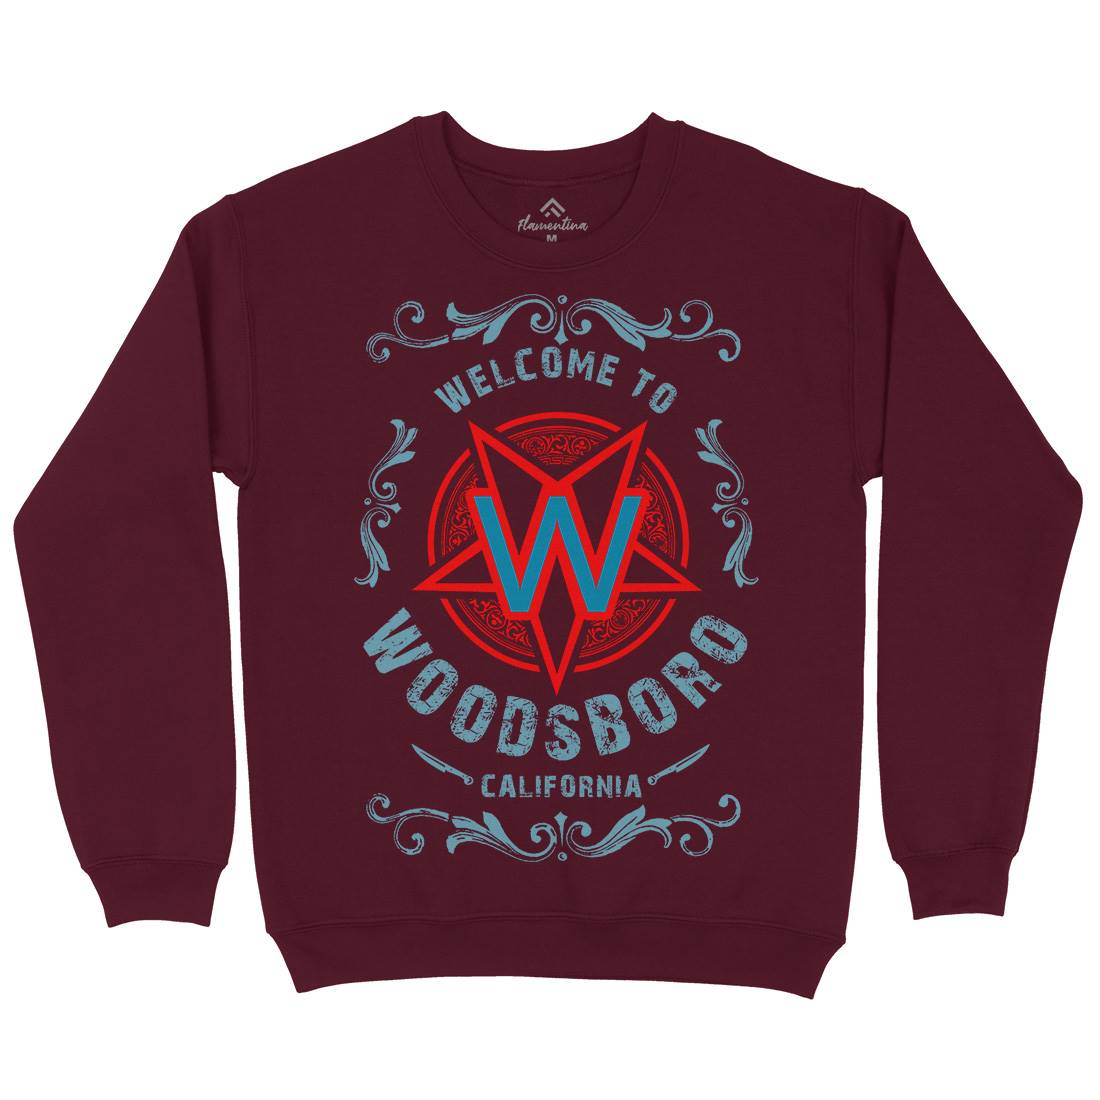 Woodsboro Kids Crew Neck Sweatshirt Horror D292